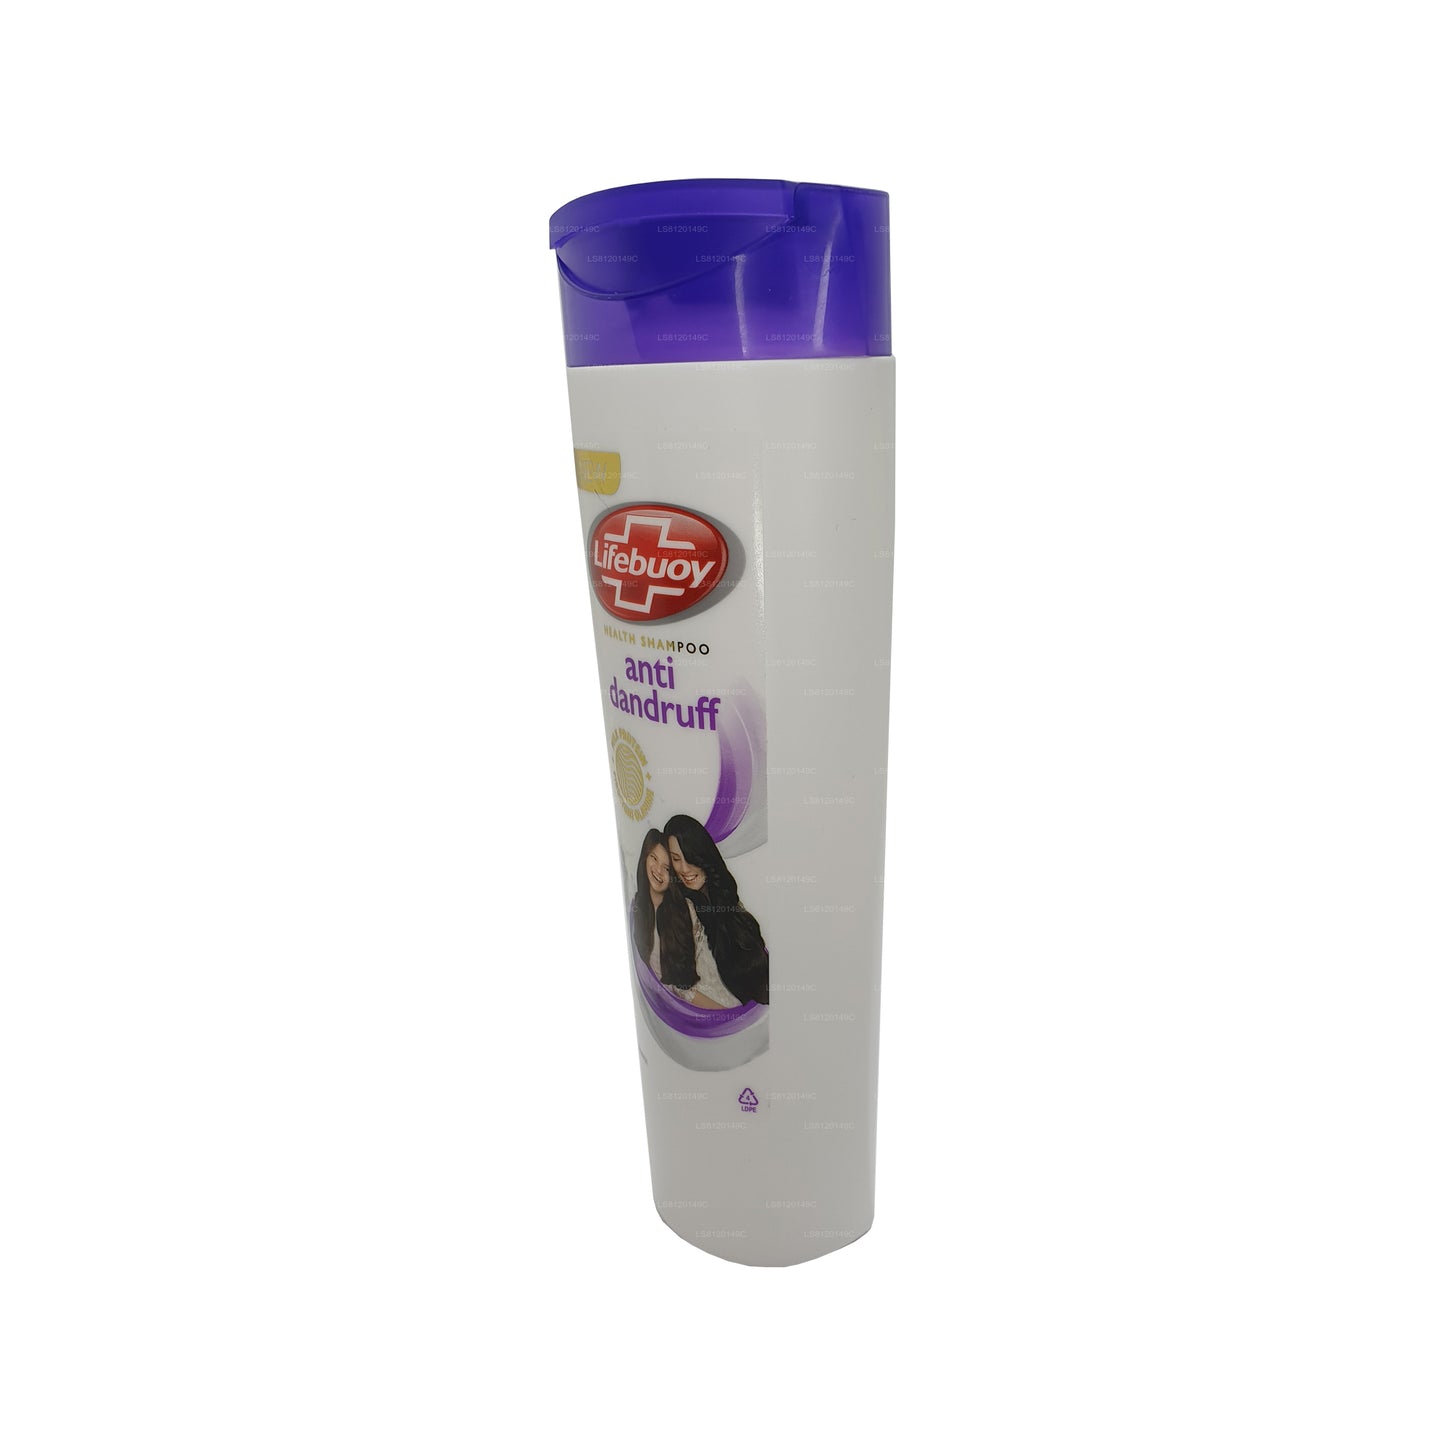 Shampoo antiforfora Lifebuoy (175ml)